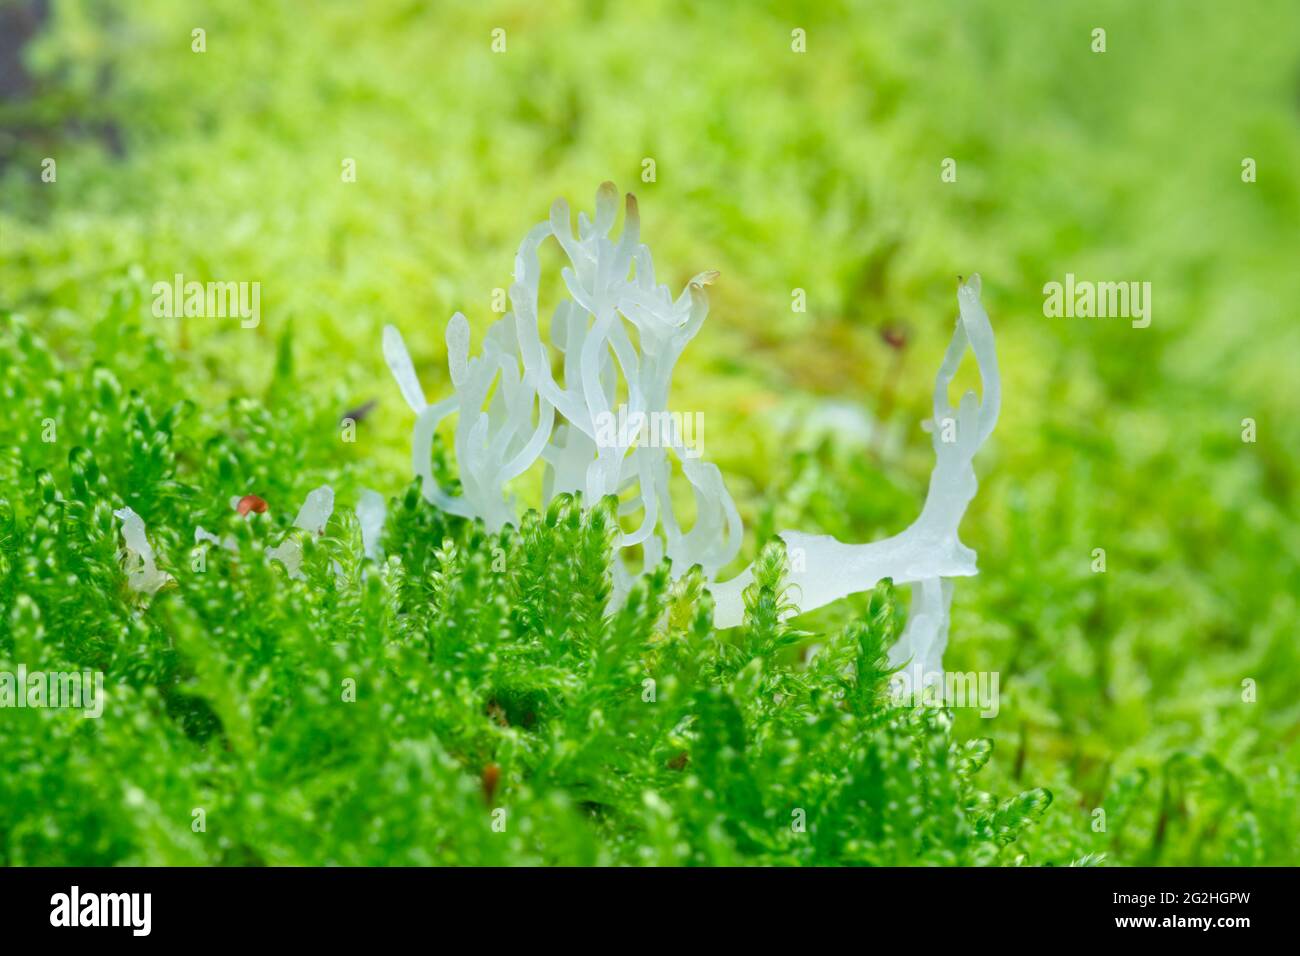 Lentaria epichnoa growing in natural environment Stock Photo